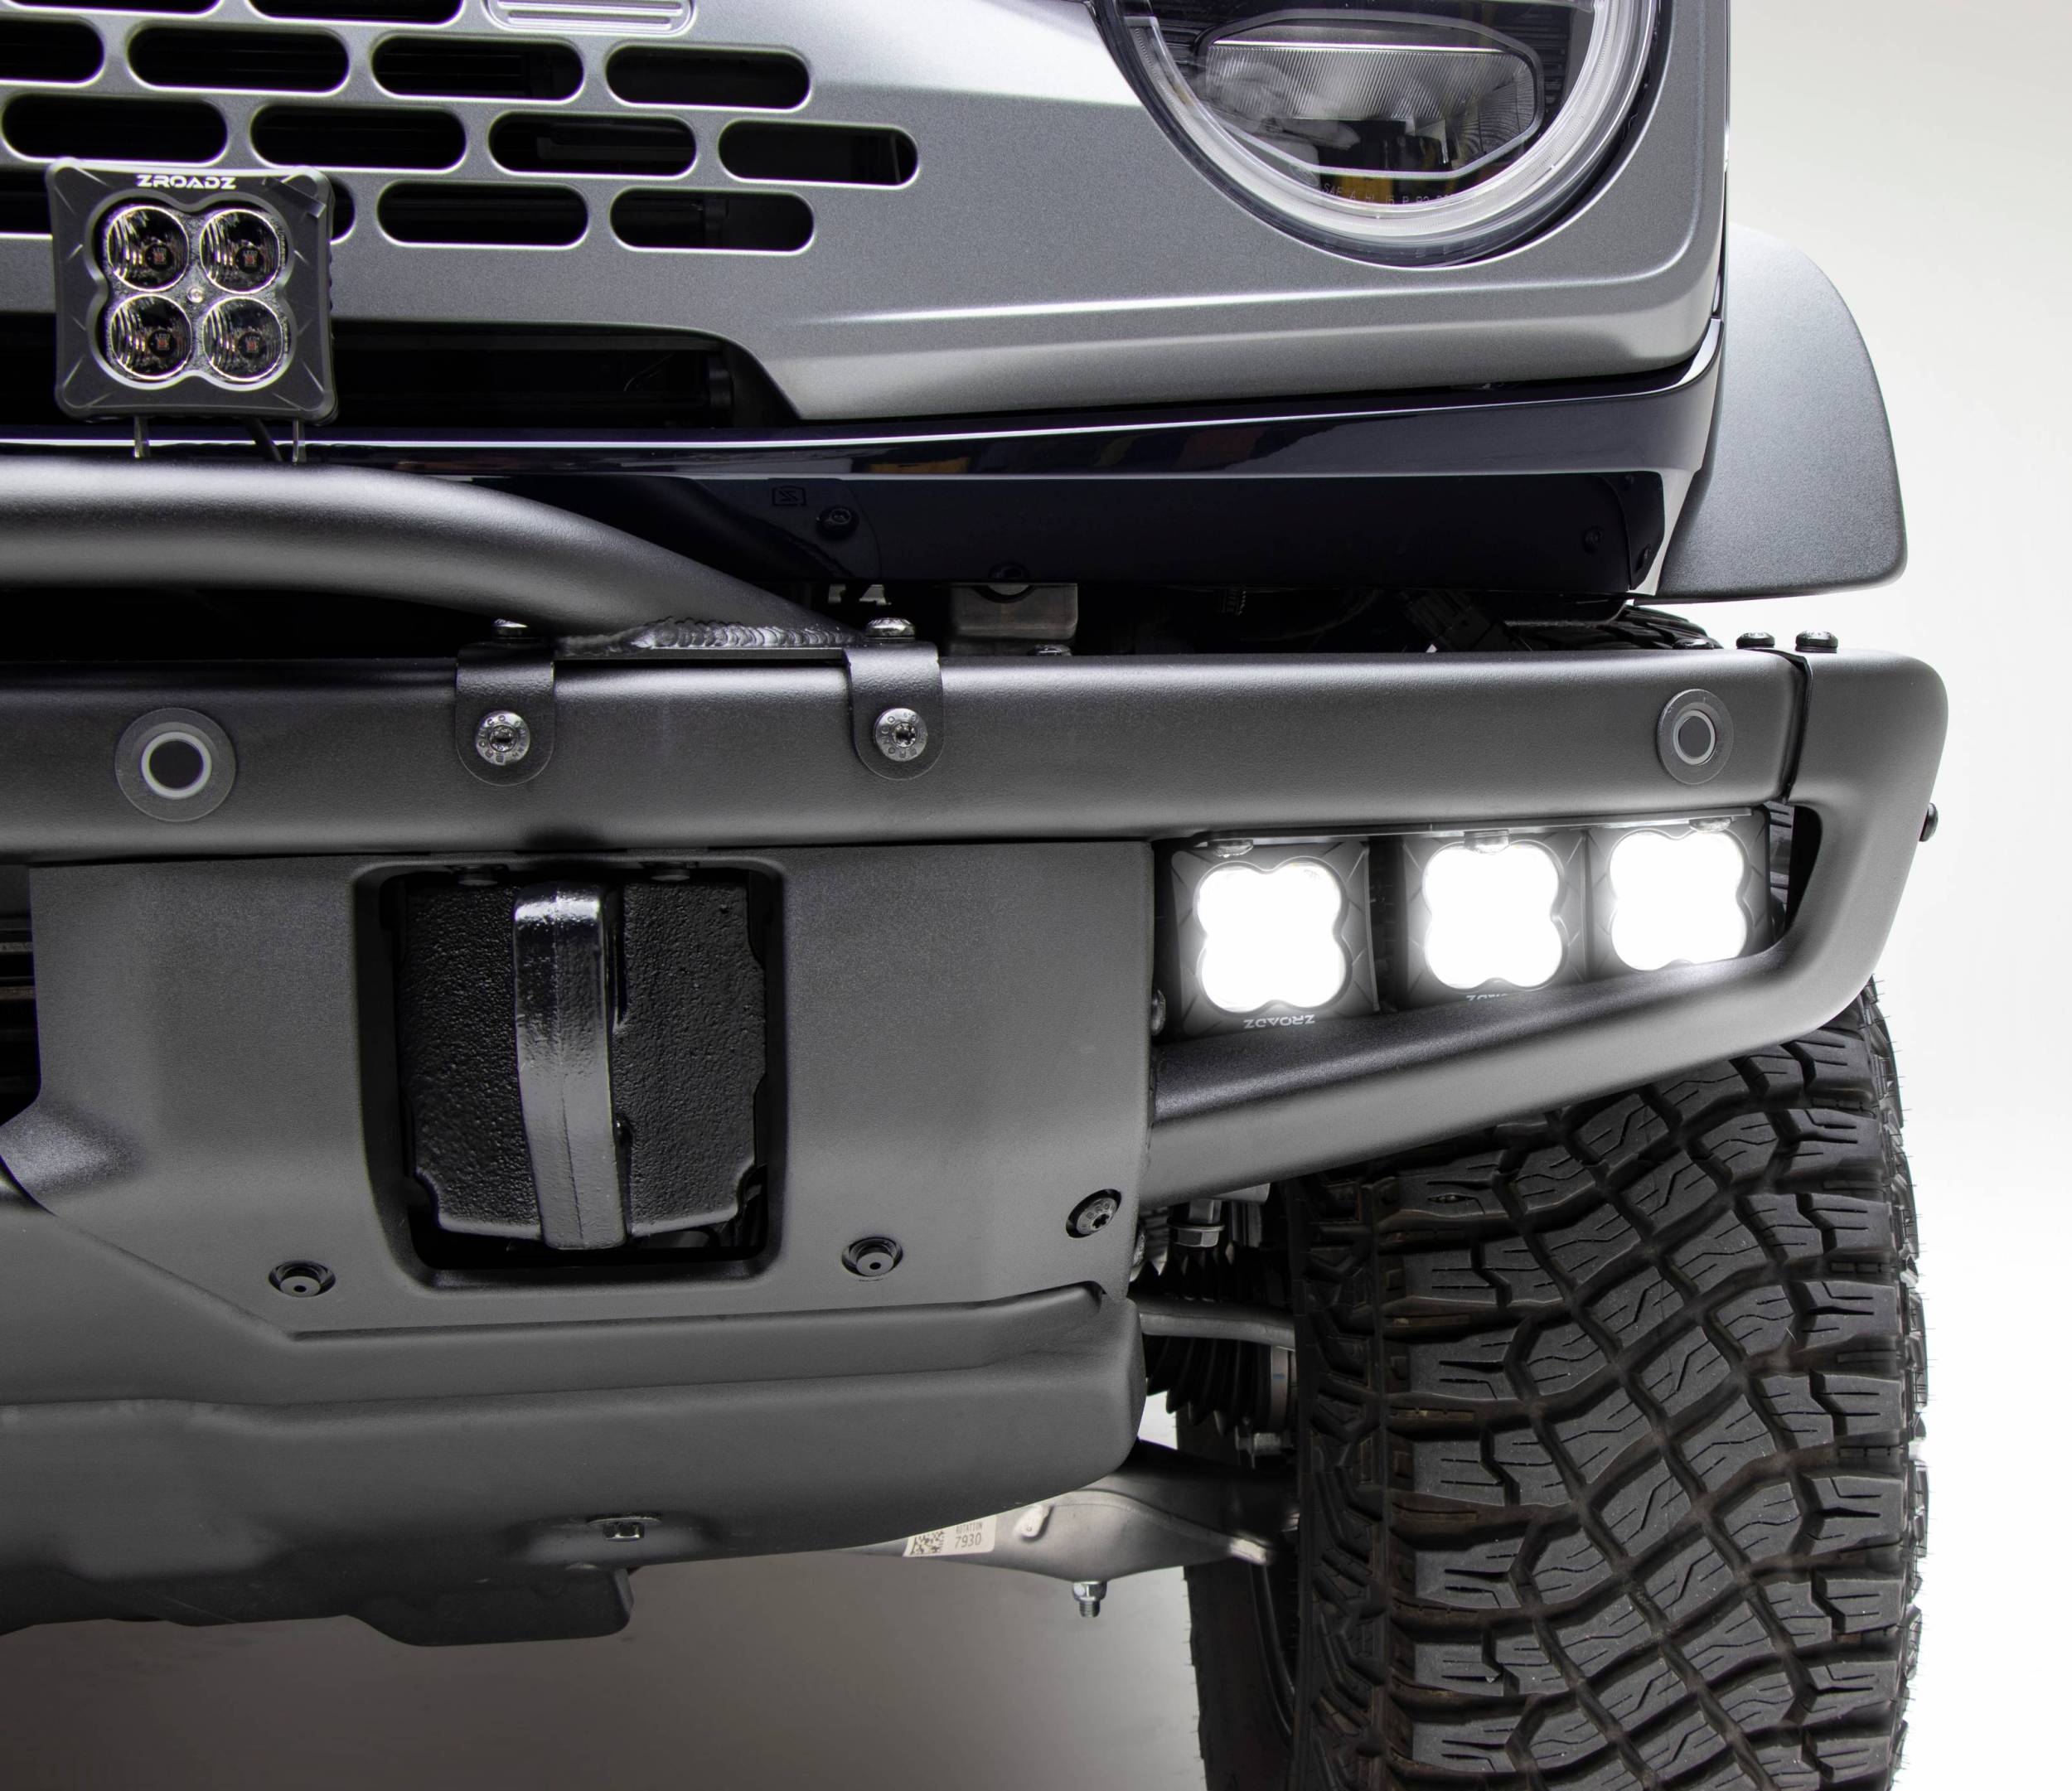 ZROADZ OFF ROAD PRODUCTS - 2021-2022 Ford Bronco Front Bumper Fog LED KIT, Includes (6) 3 inch ZROADZ White LED Pod Lights - Part # Z325401-KIT